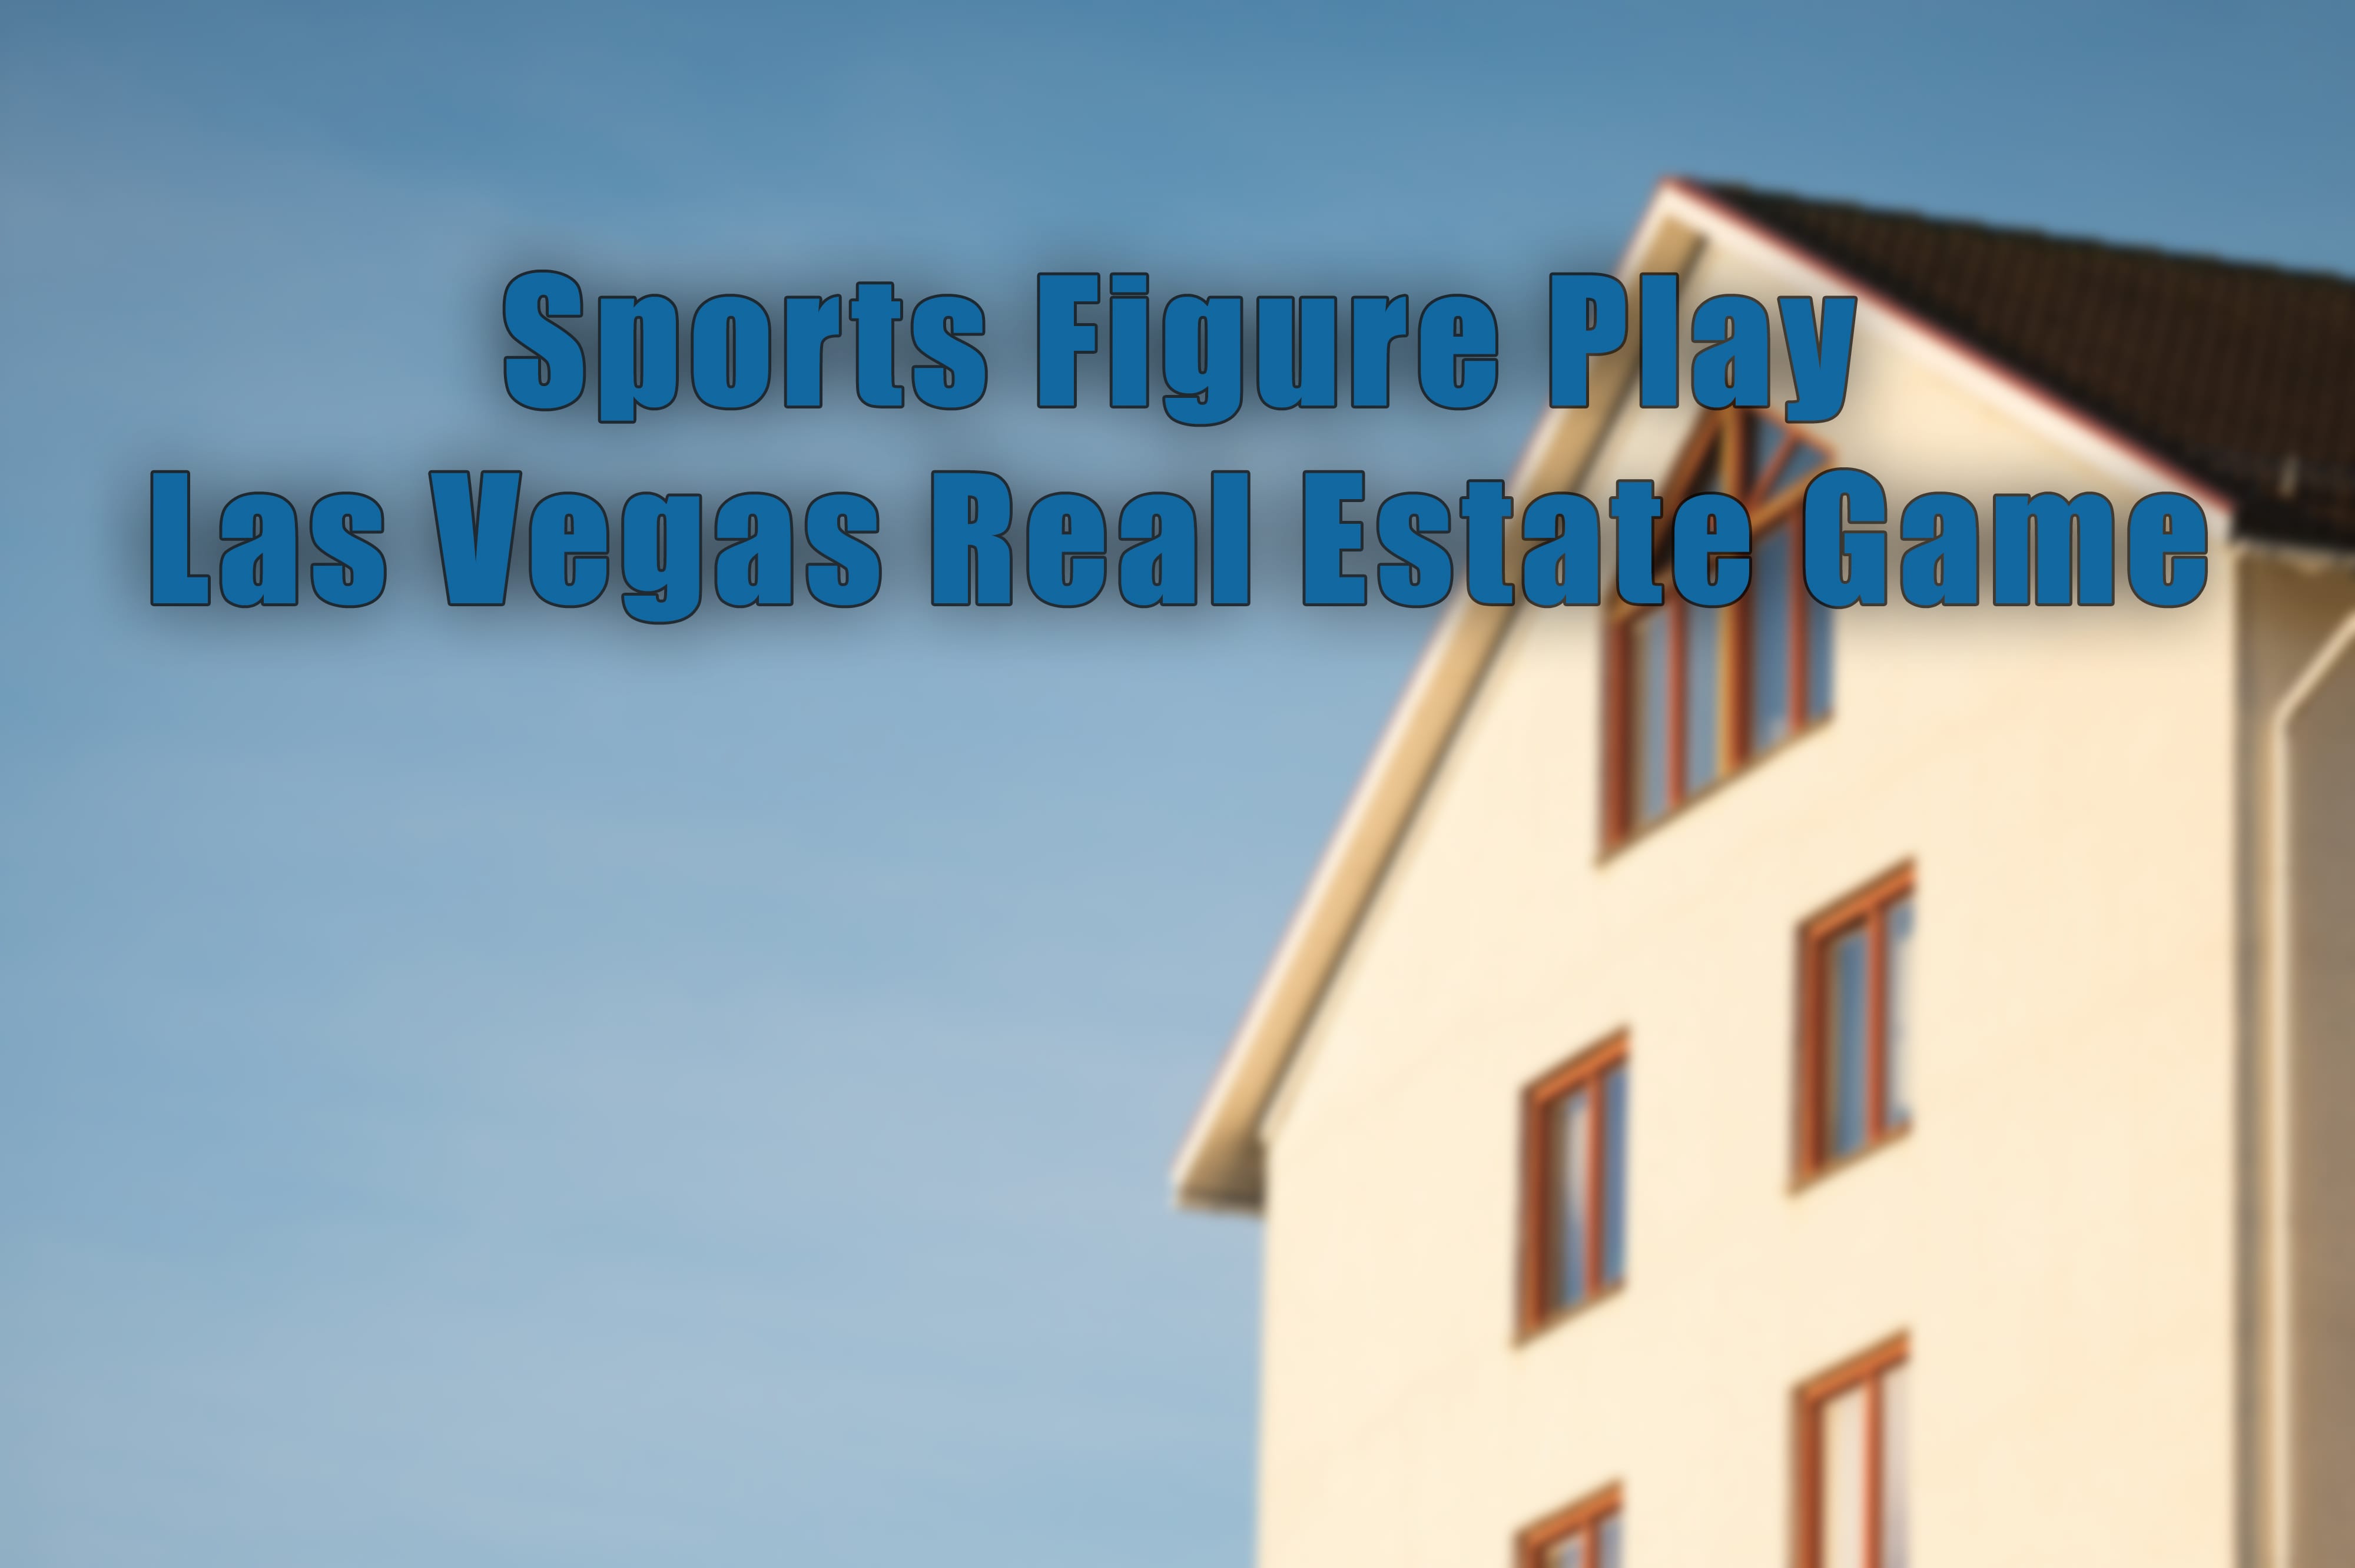 Sports Figure Play Real Estate.jpg